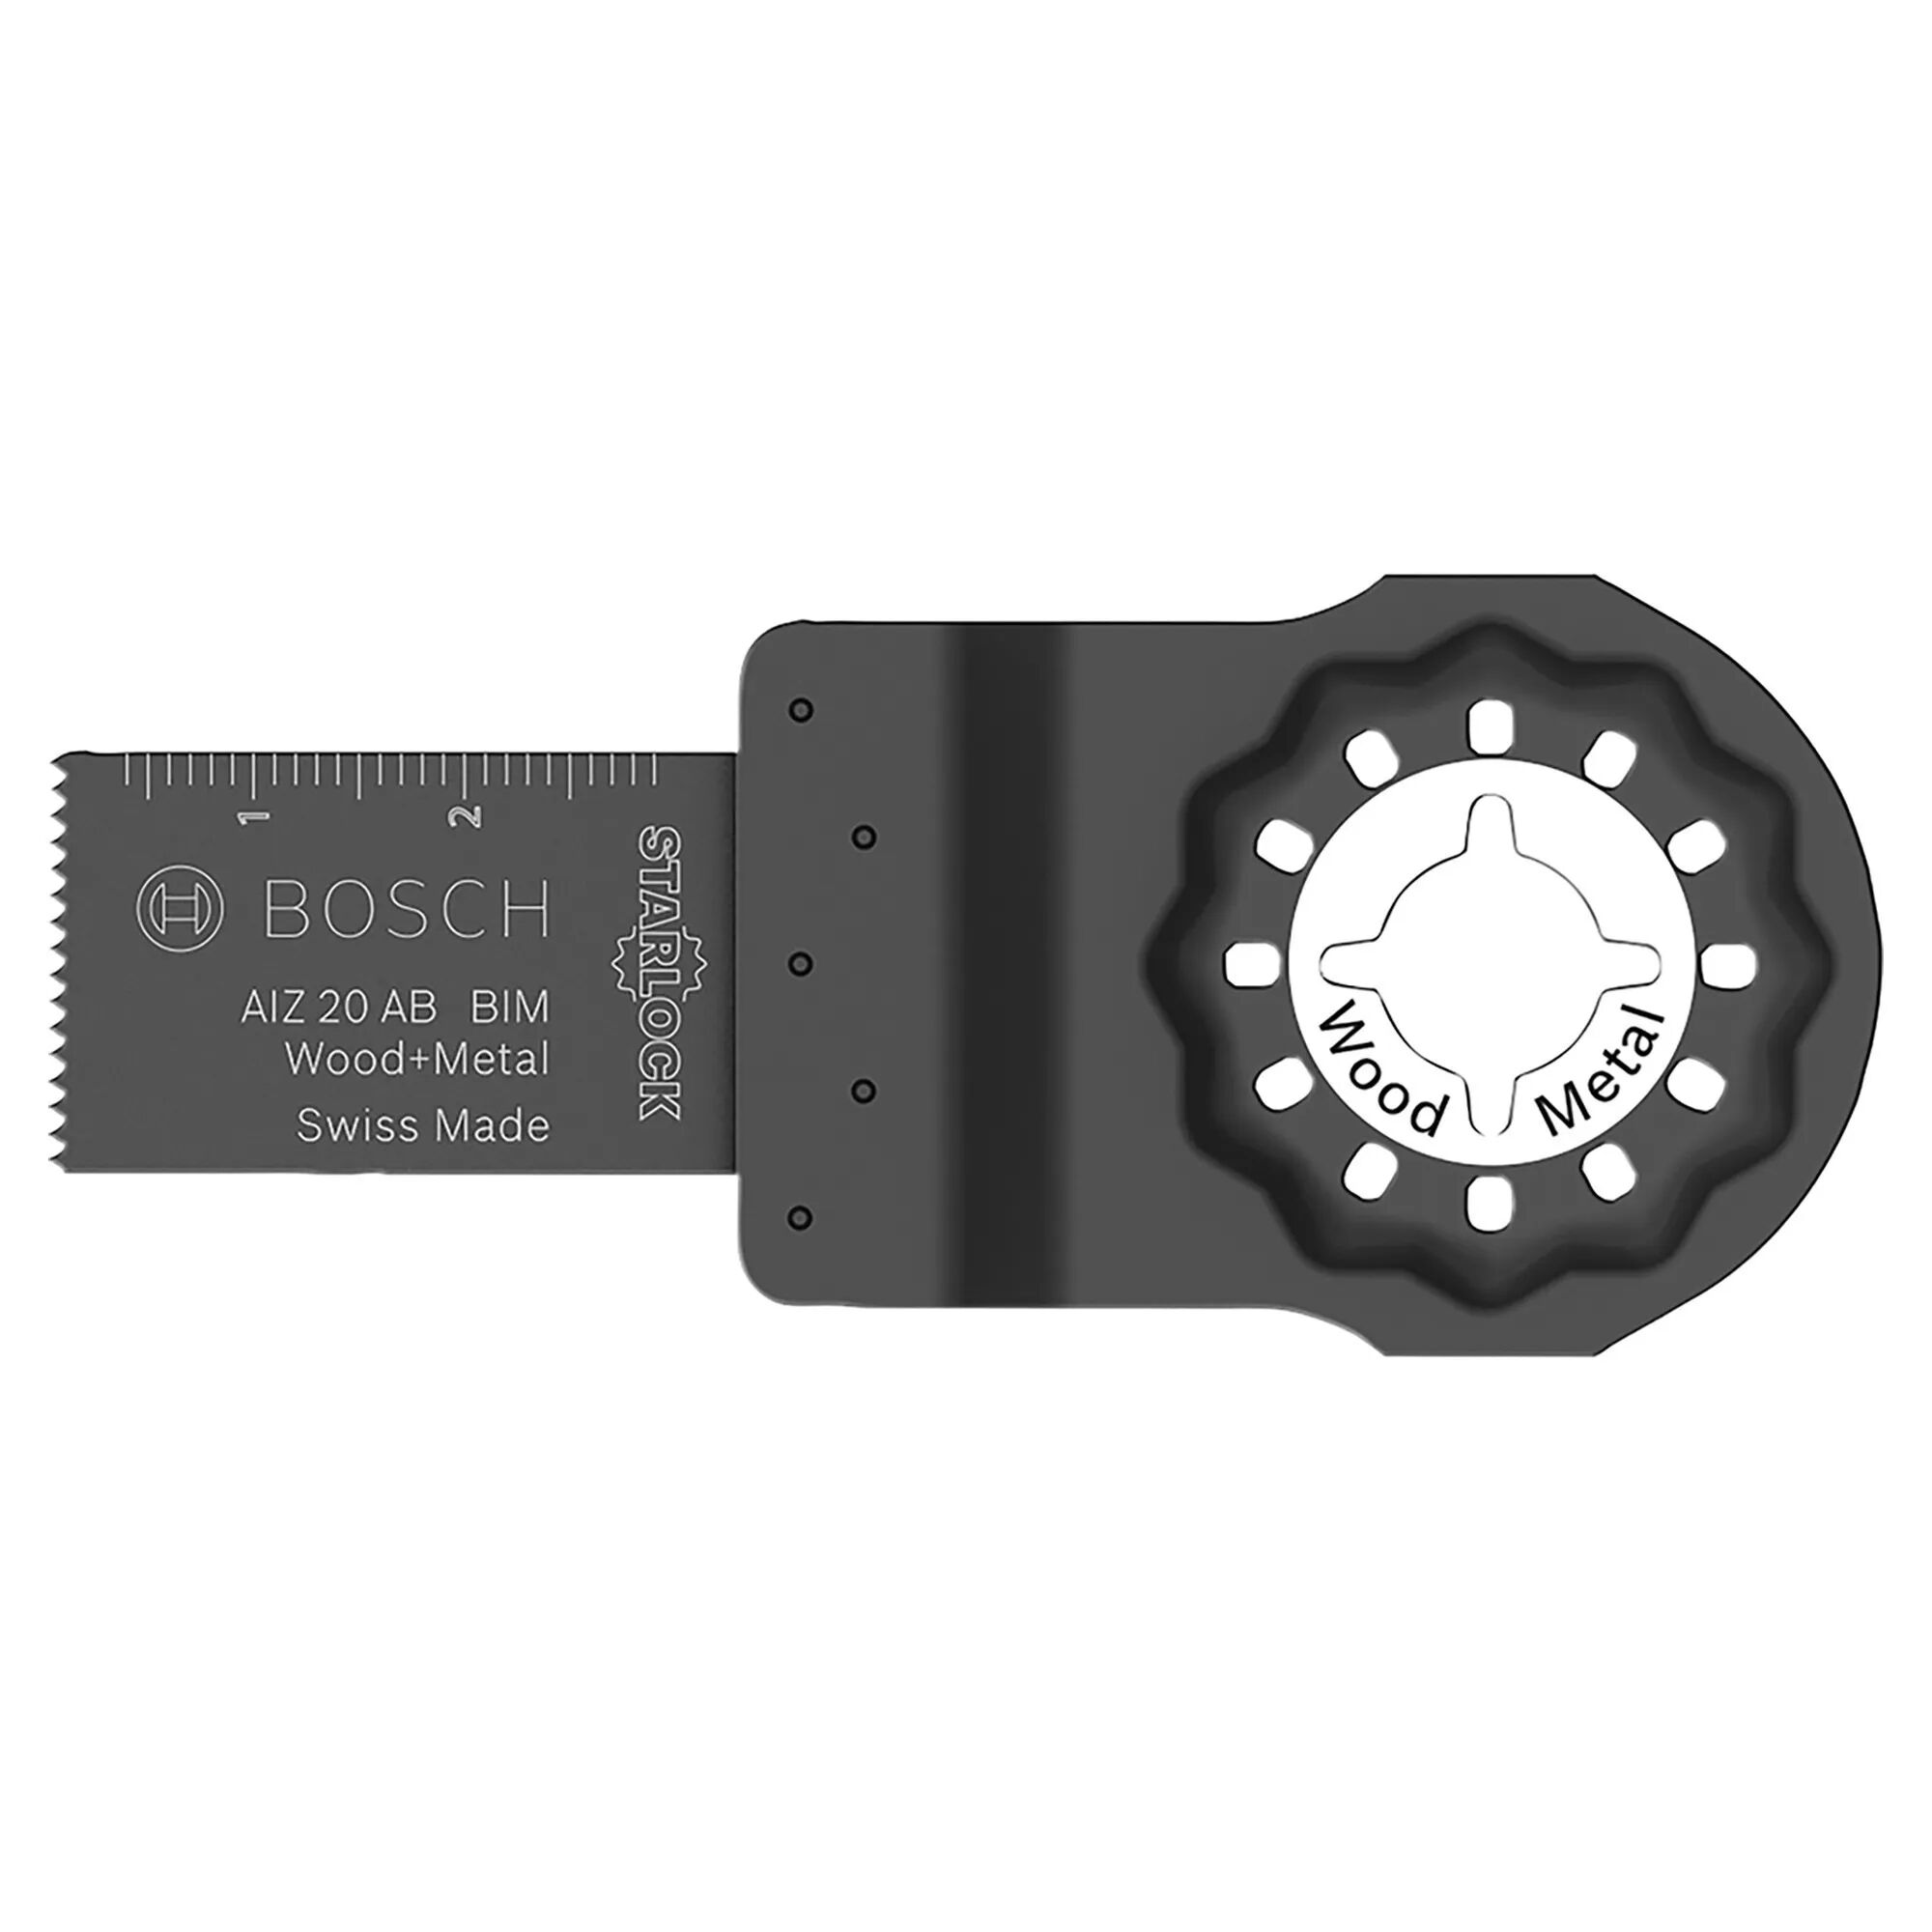 Bosch LAMA MULTIFUNZIONE  20 x 30 mm LEGNO-METALLO AIZ 20 AB BIM